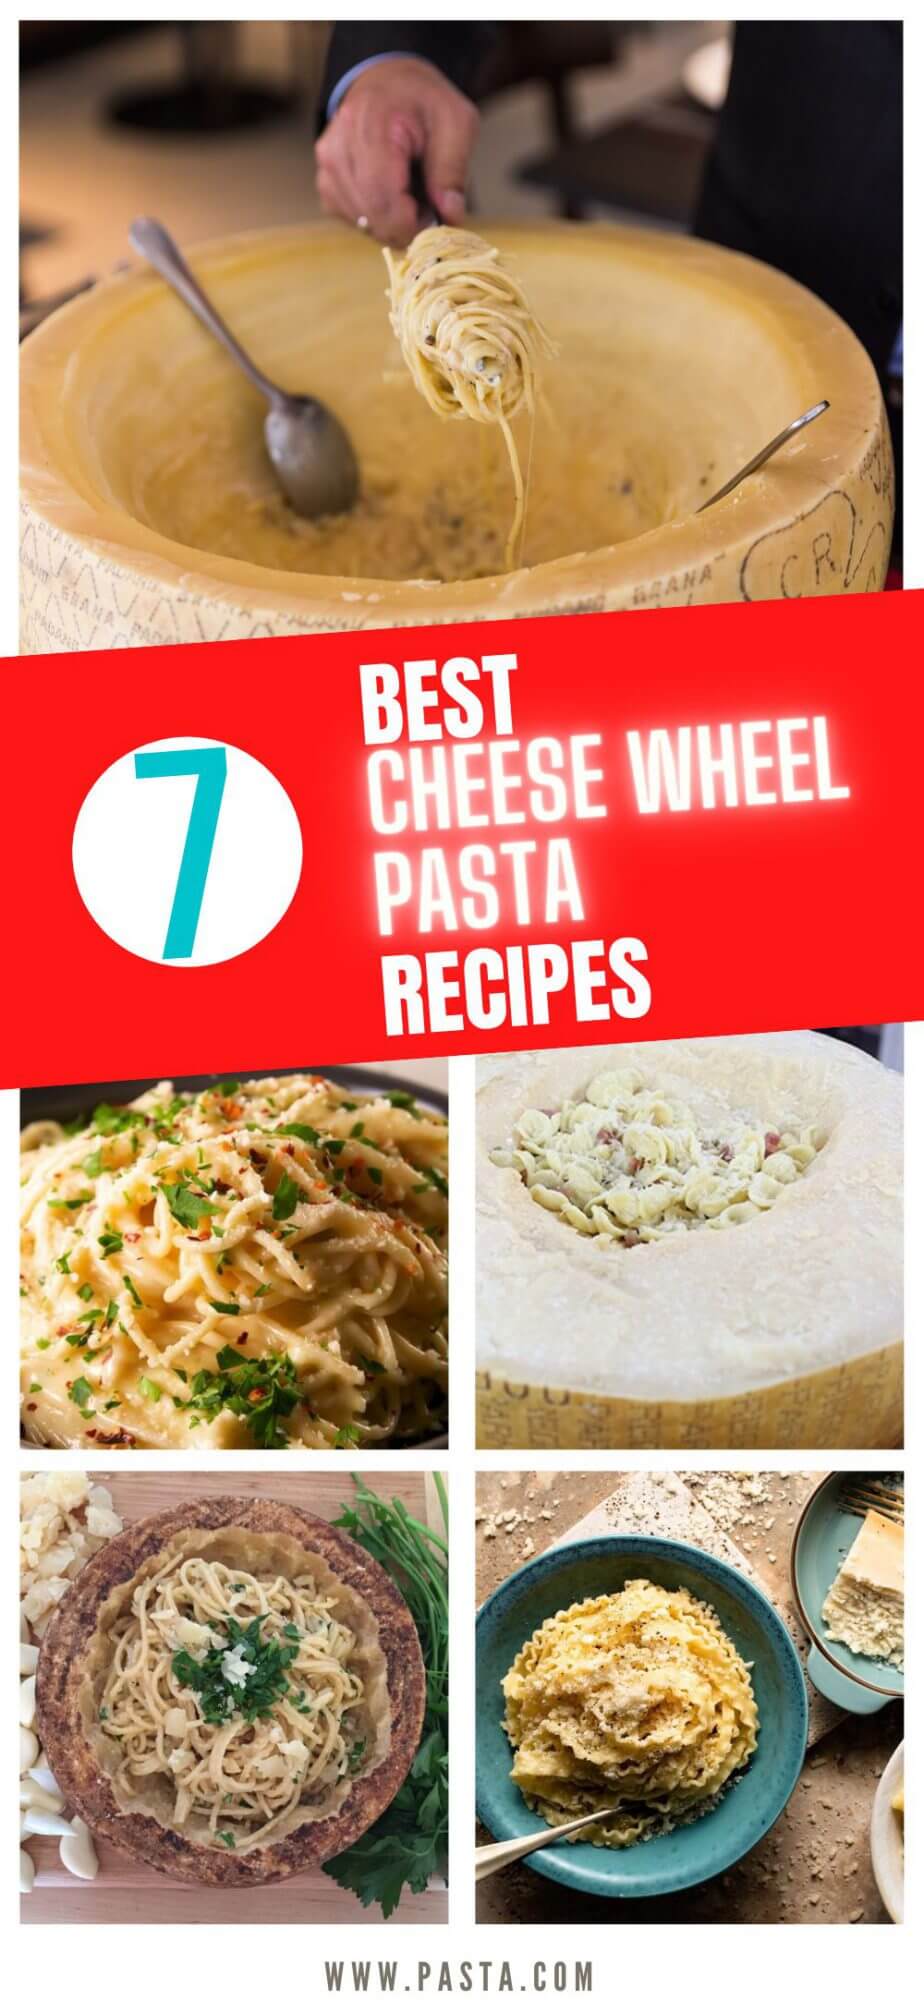 7 Best Cheese Wheel Pasta Recipes 